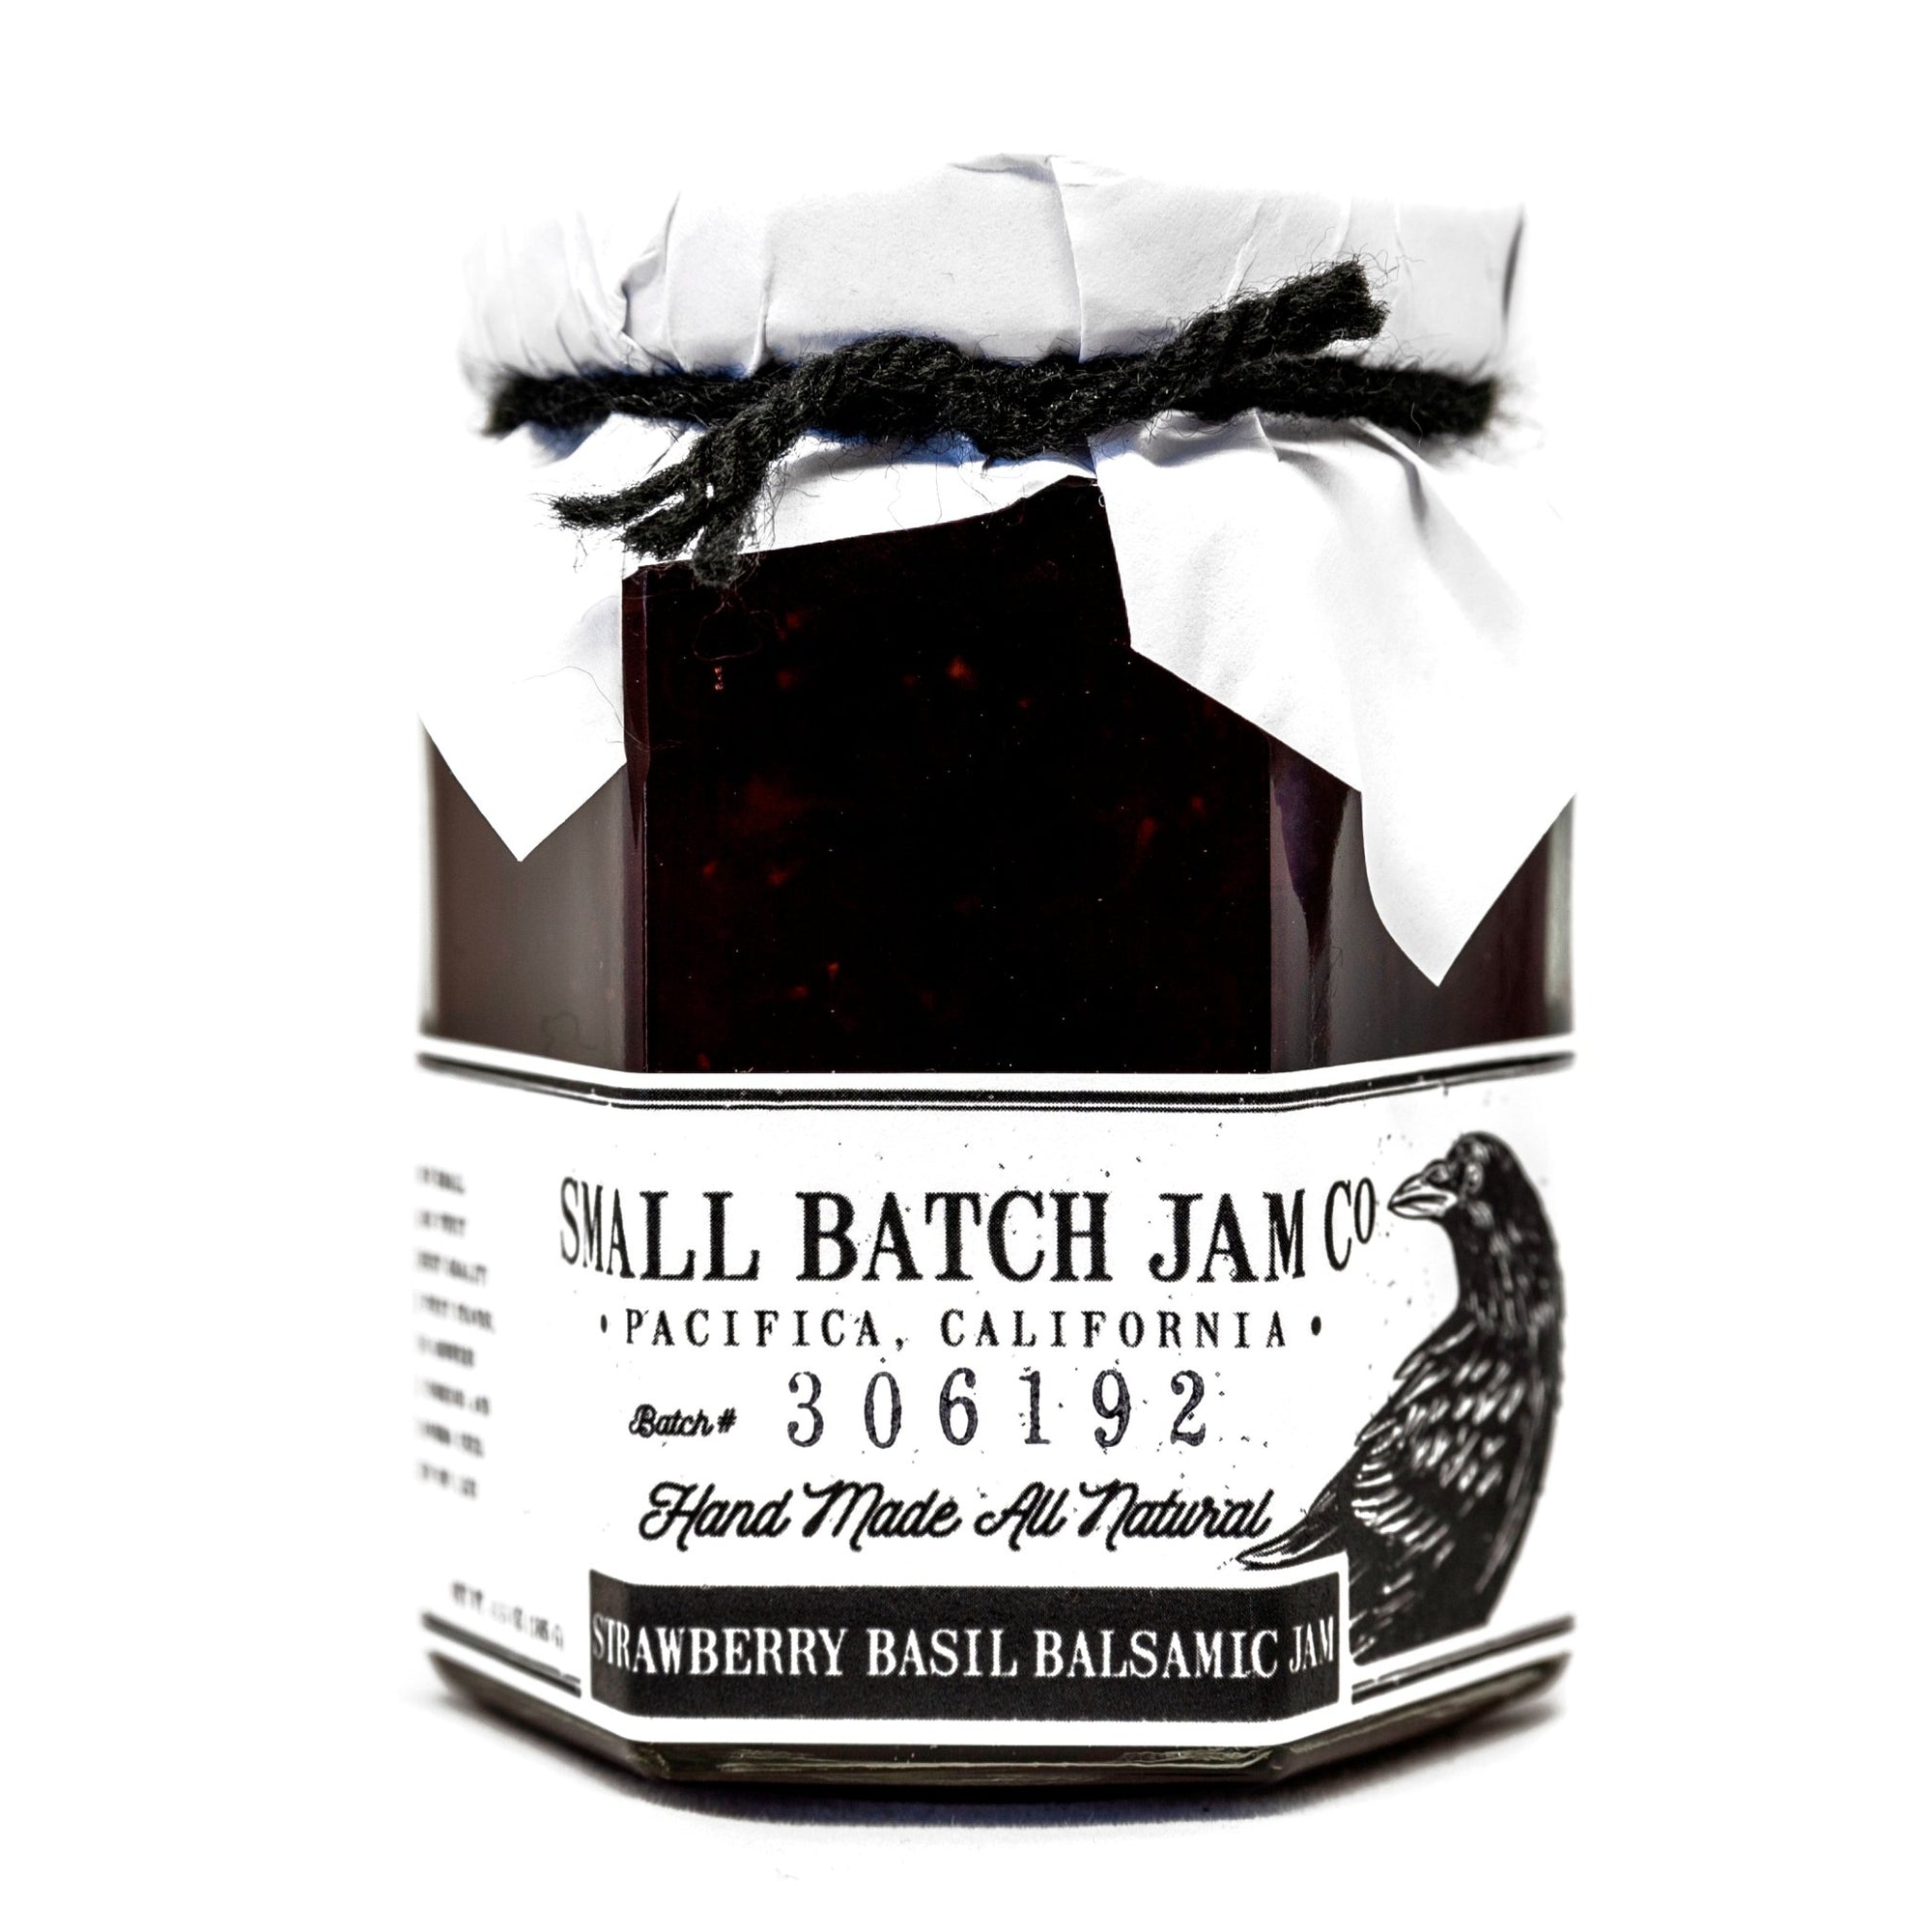 Strawberry Basil Balsamic Jam - Small Batch Jam Co